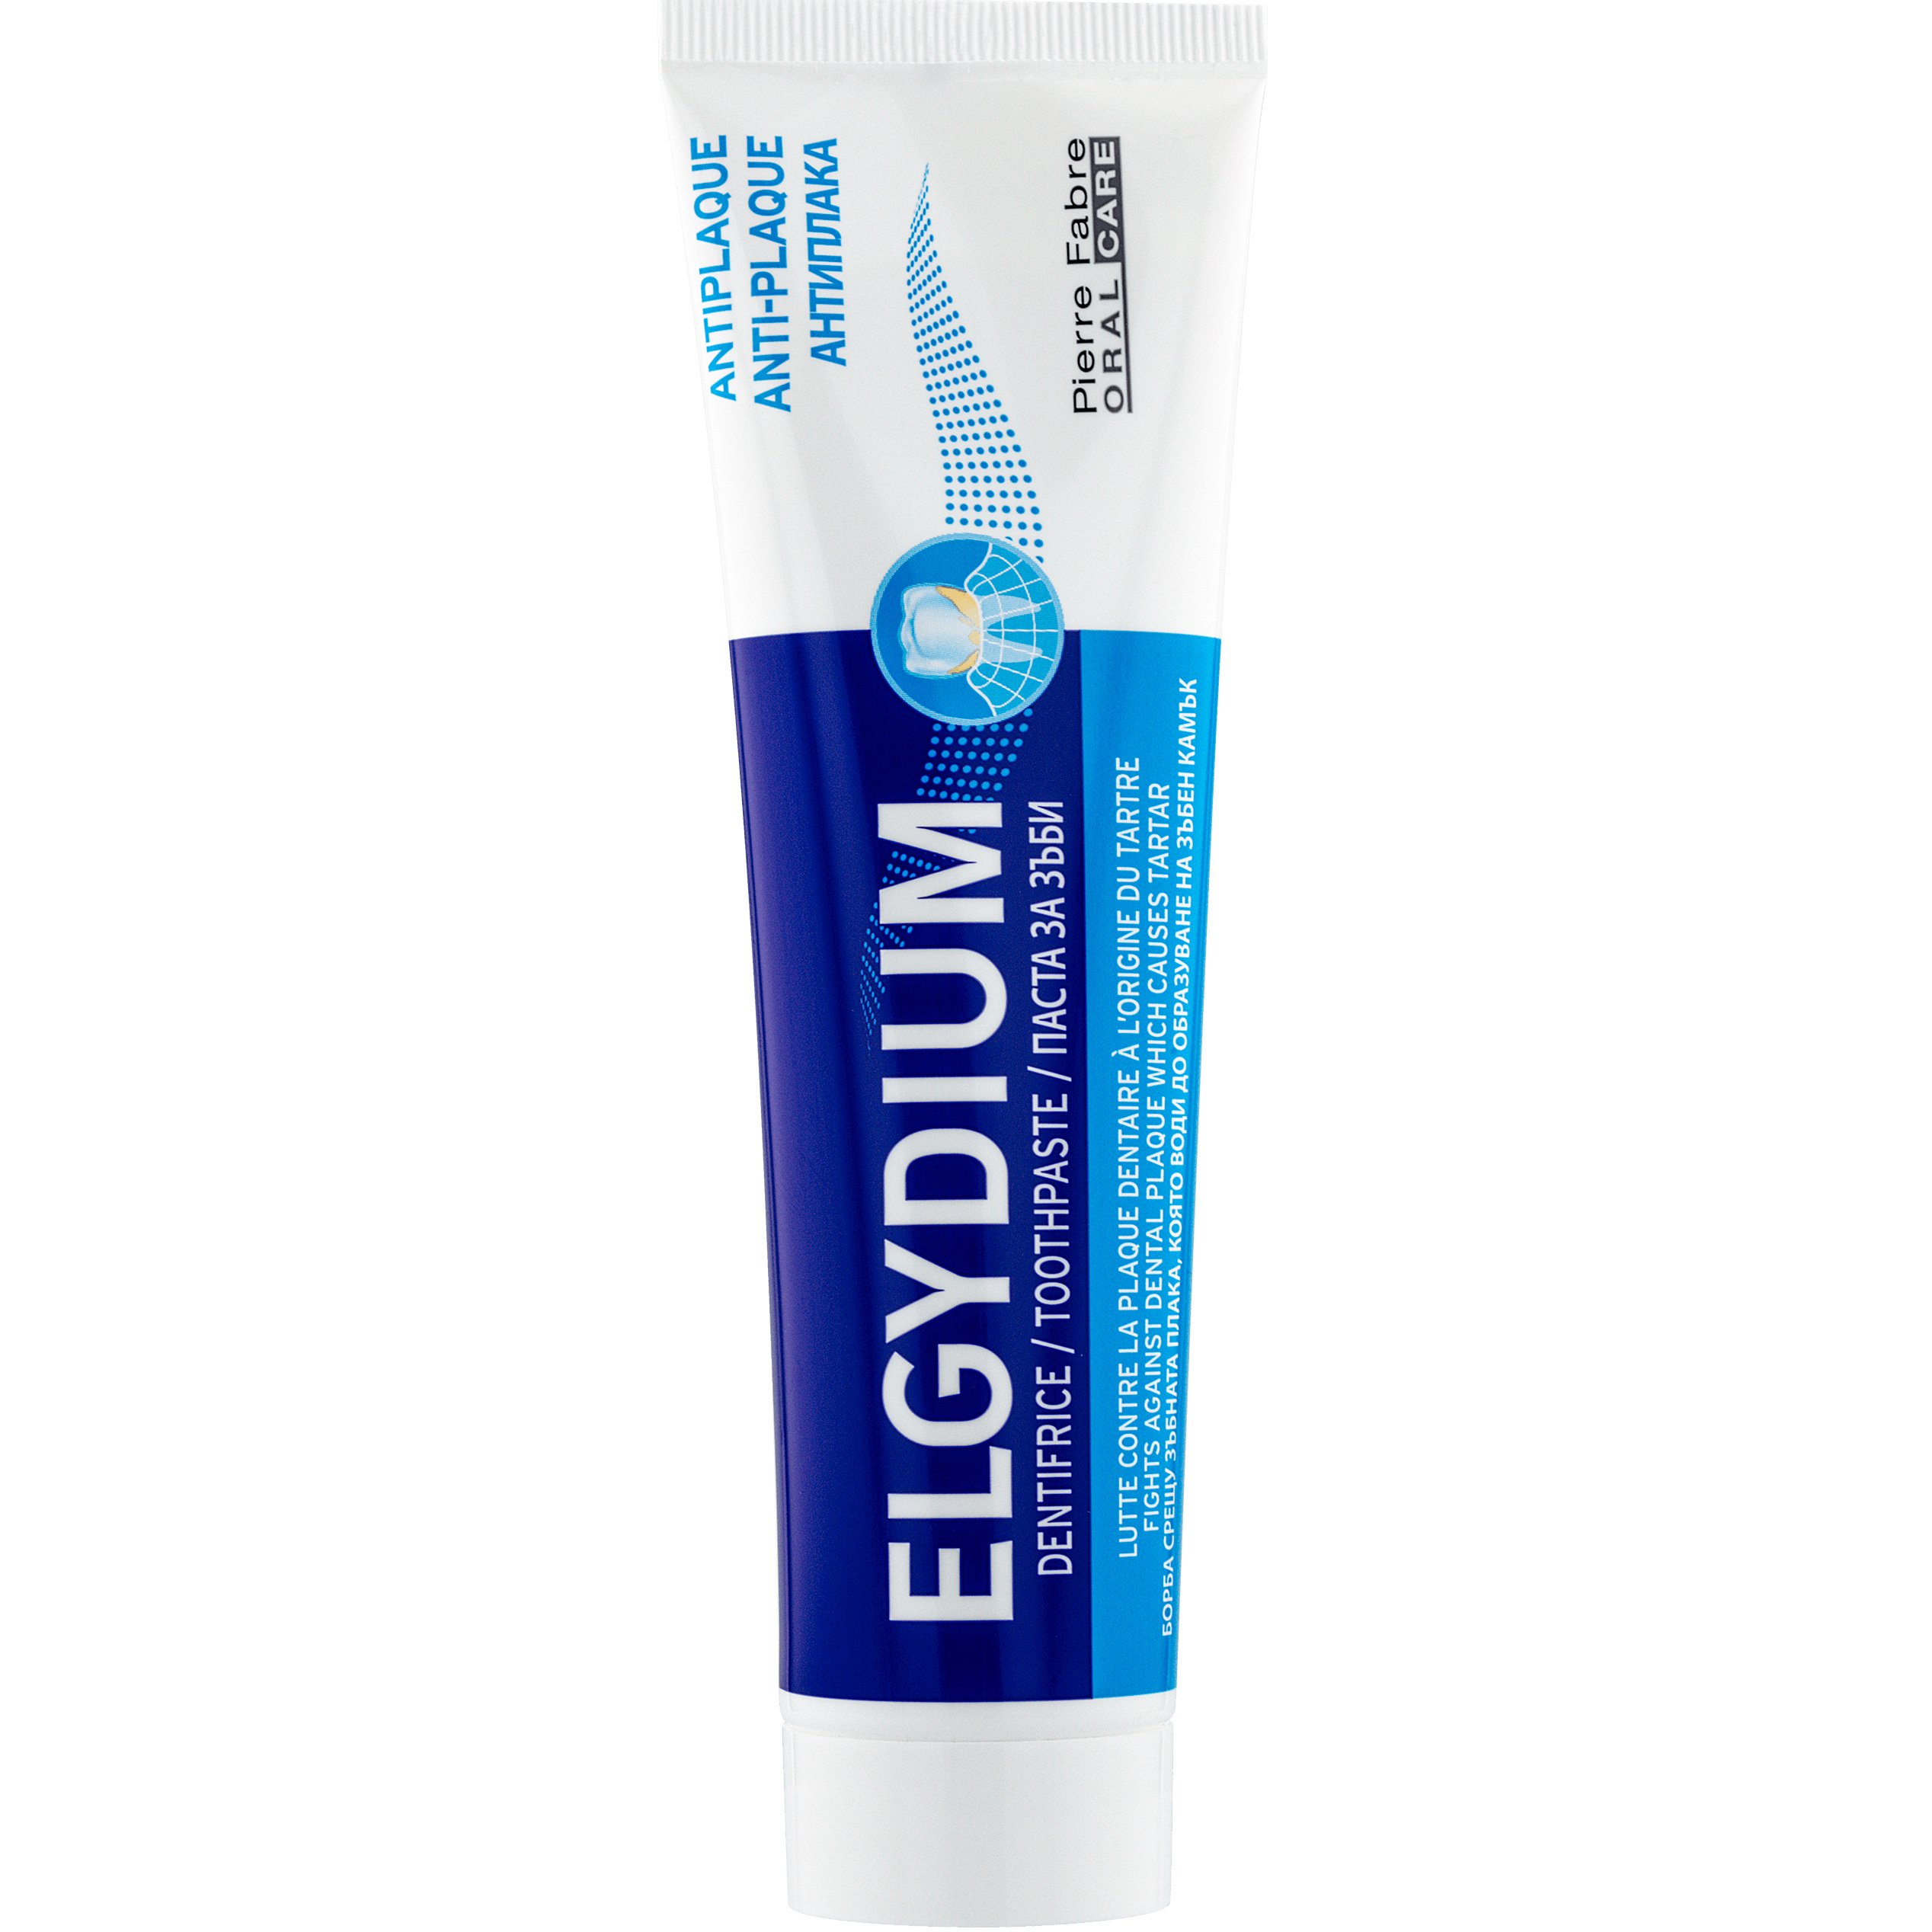 Pierre Fabre Oral Care Elgydium Anti-Plaque Toothpaste Οδοντόκρεμα Κατά της Οδοντικής Πλάκας 100ml